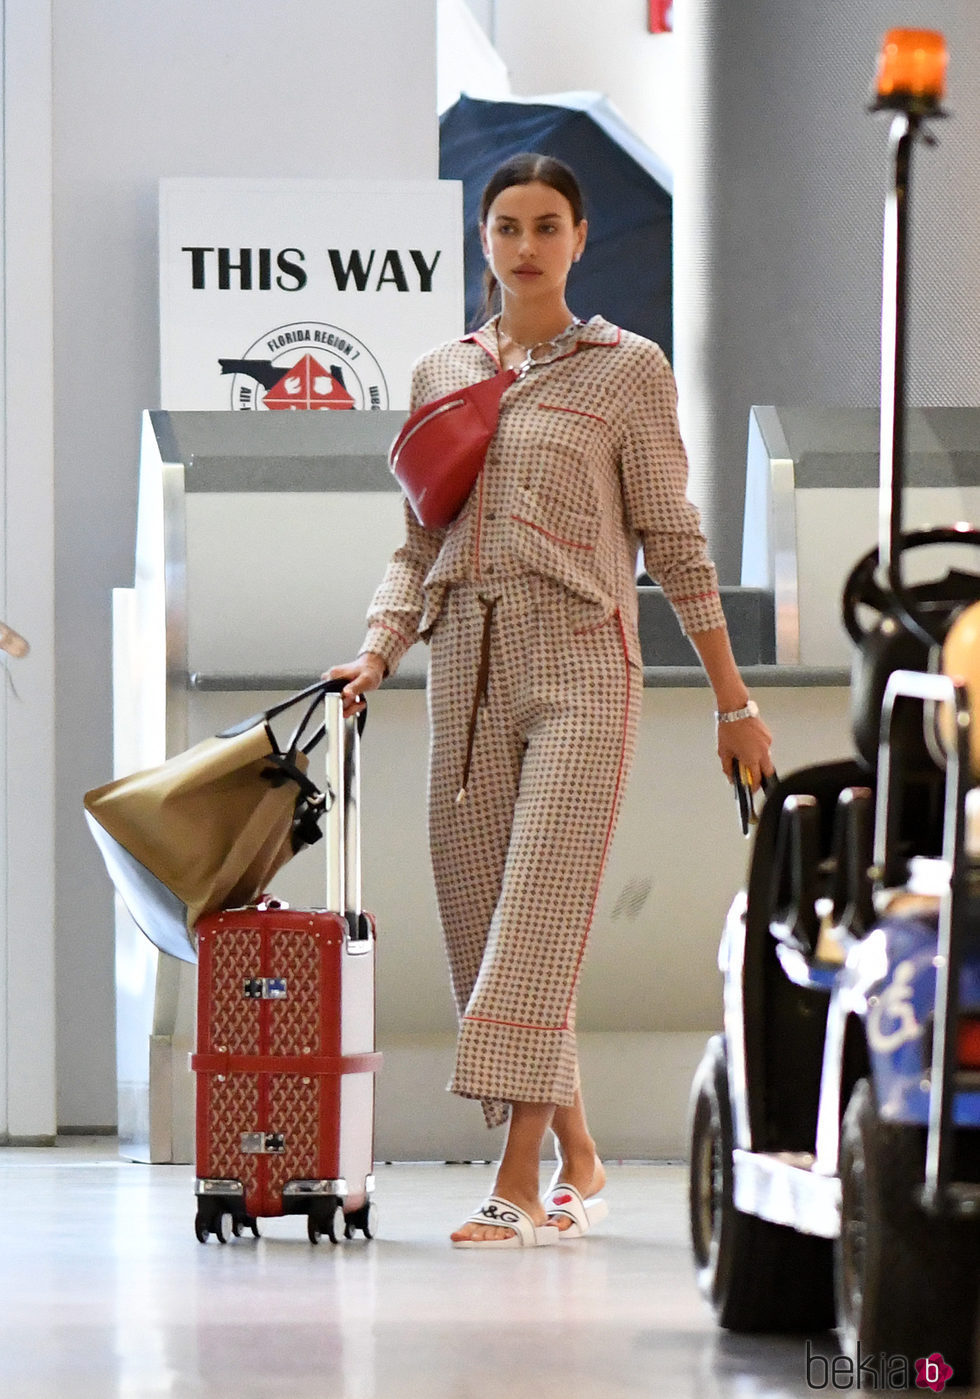 Irina Shayk con un estilo pijamero por la terminal del aeropuerto de Miami